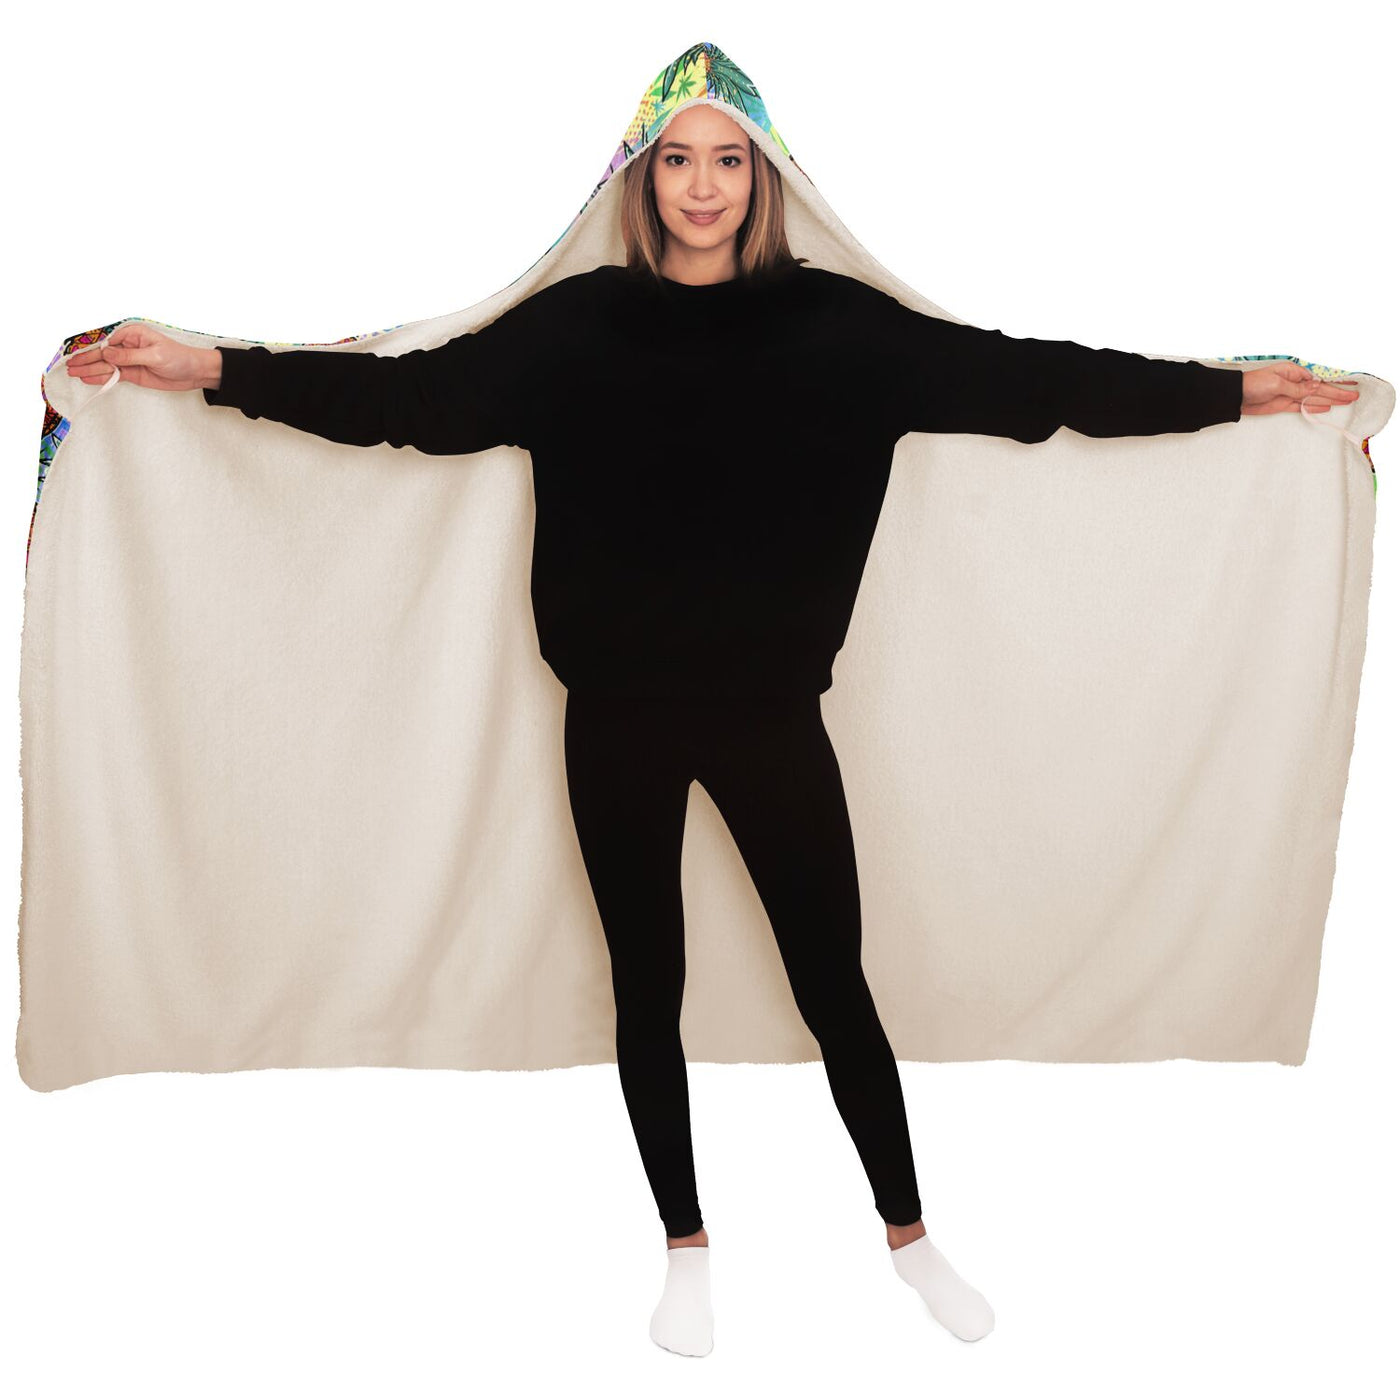 Pineapple Express: Hooded Blanket